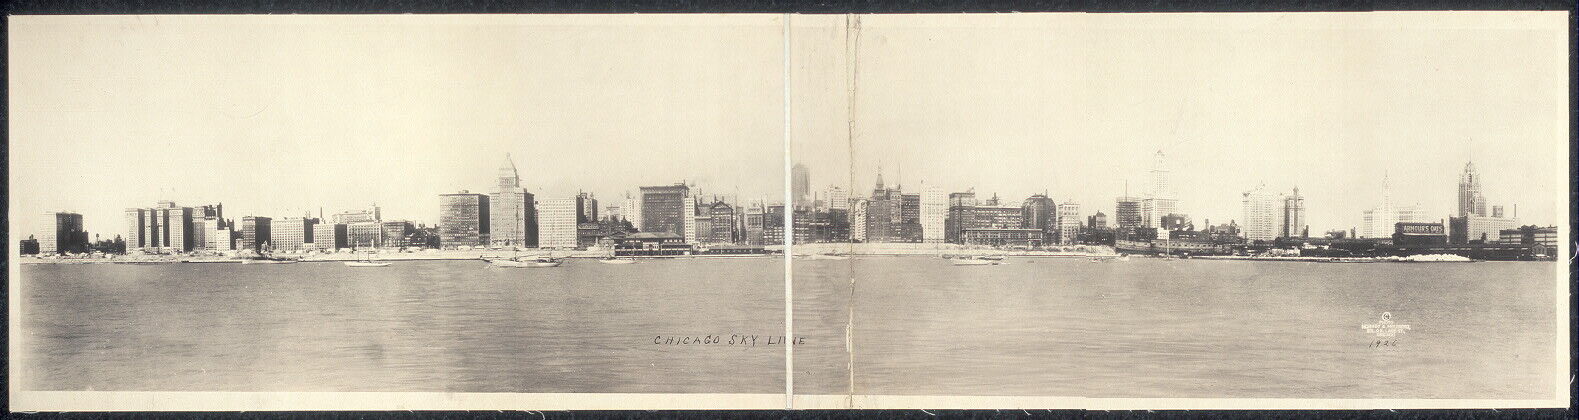 Photo:1926 Panoramic: Chicago sky line